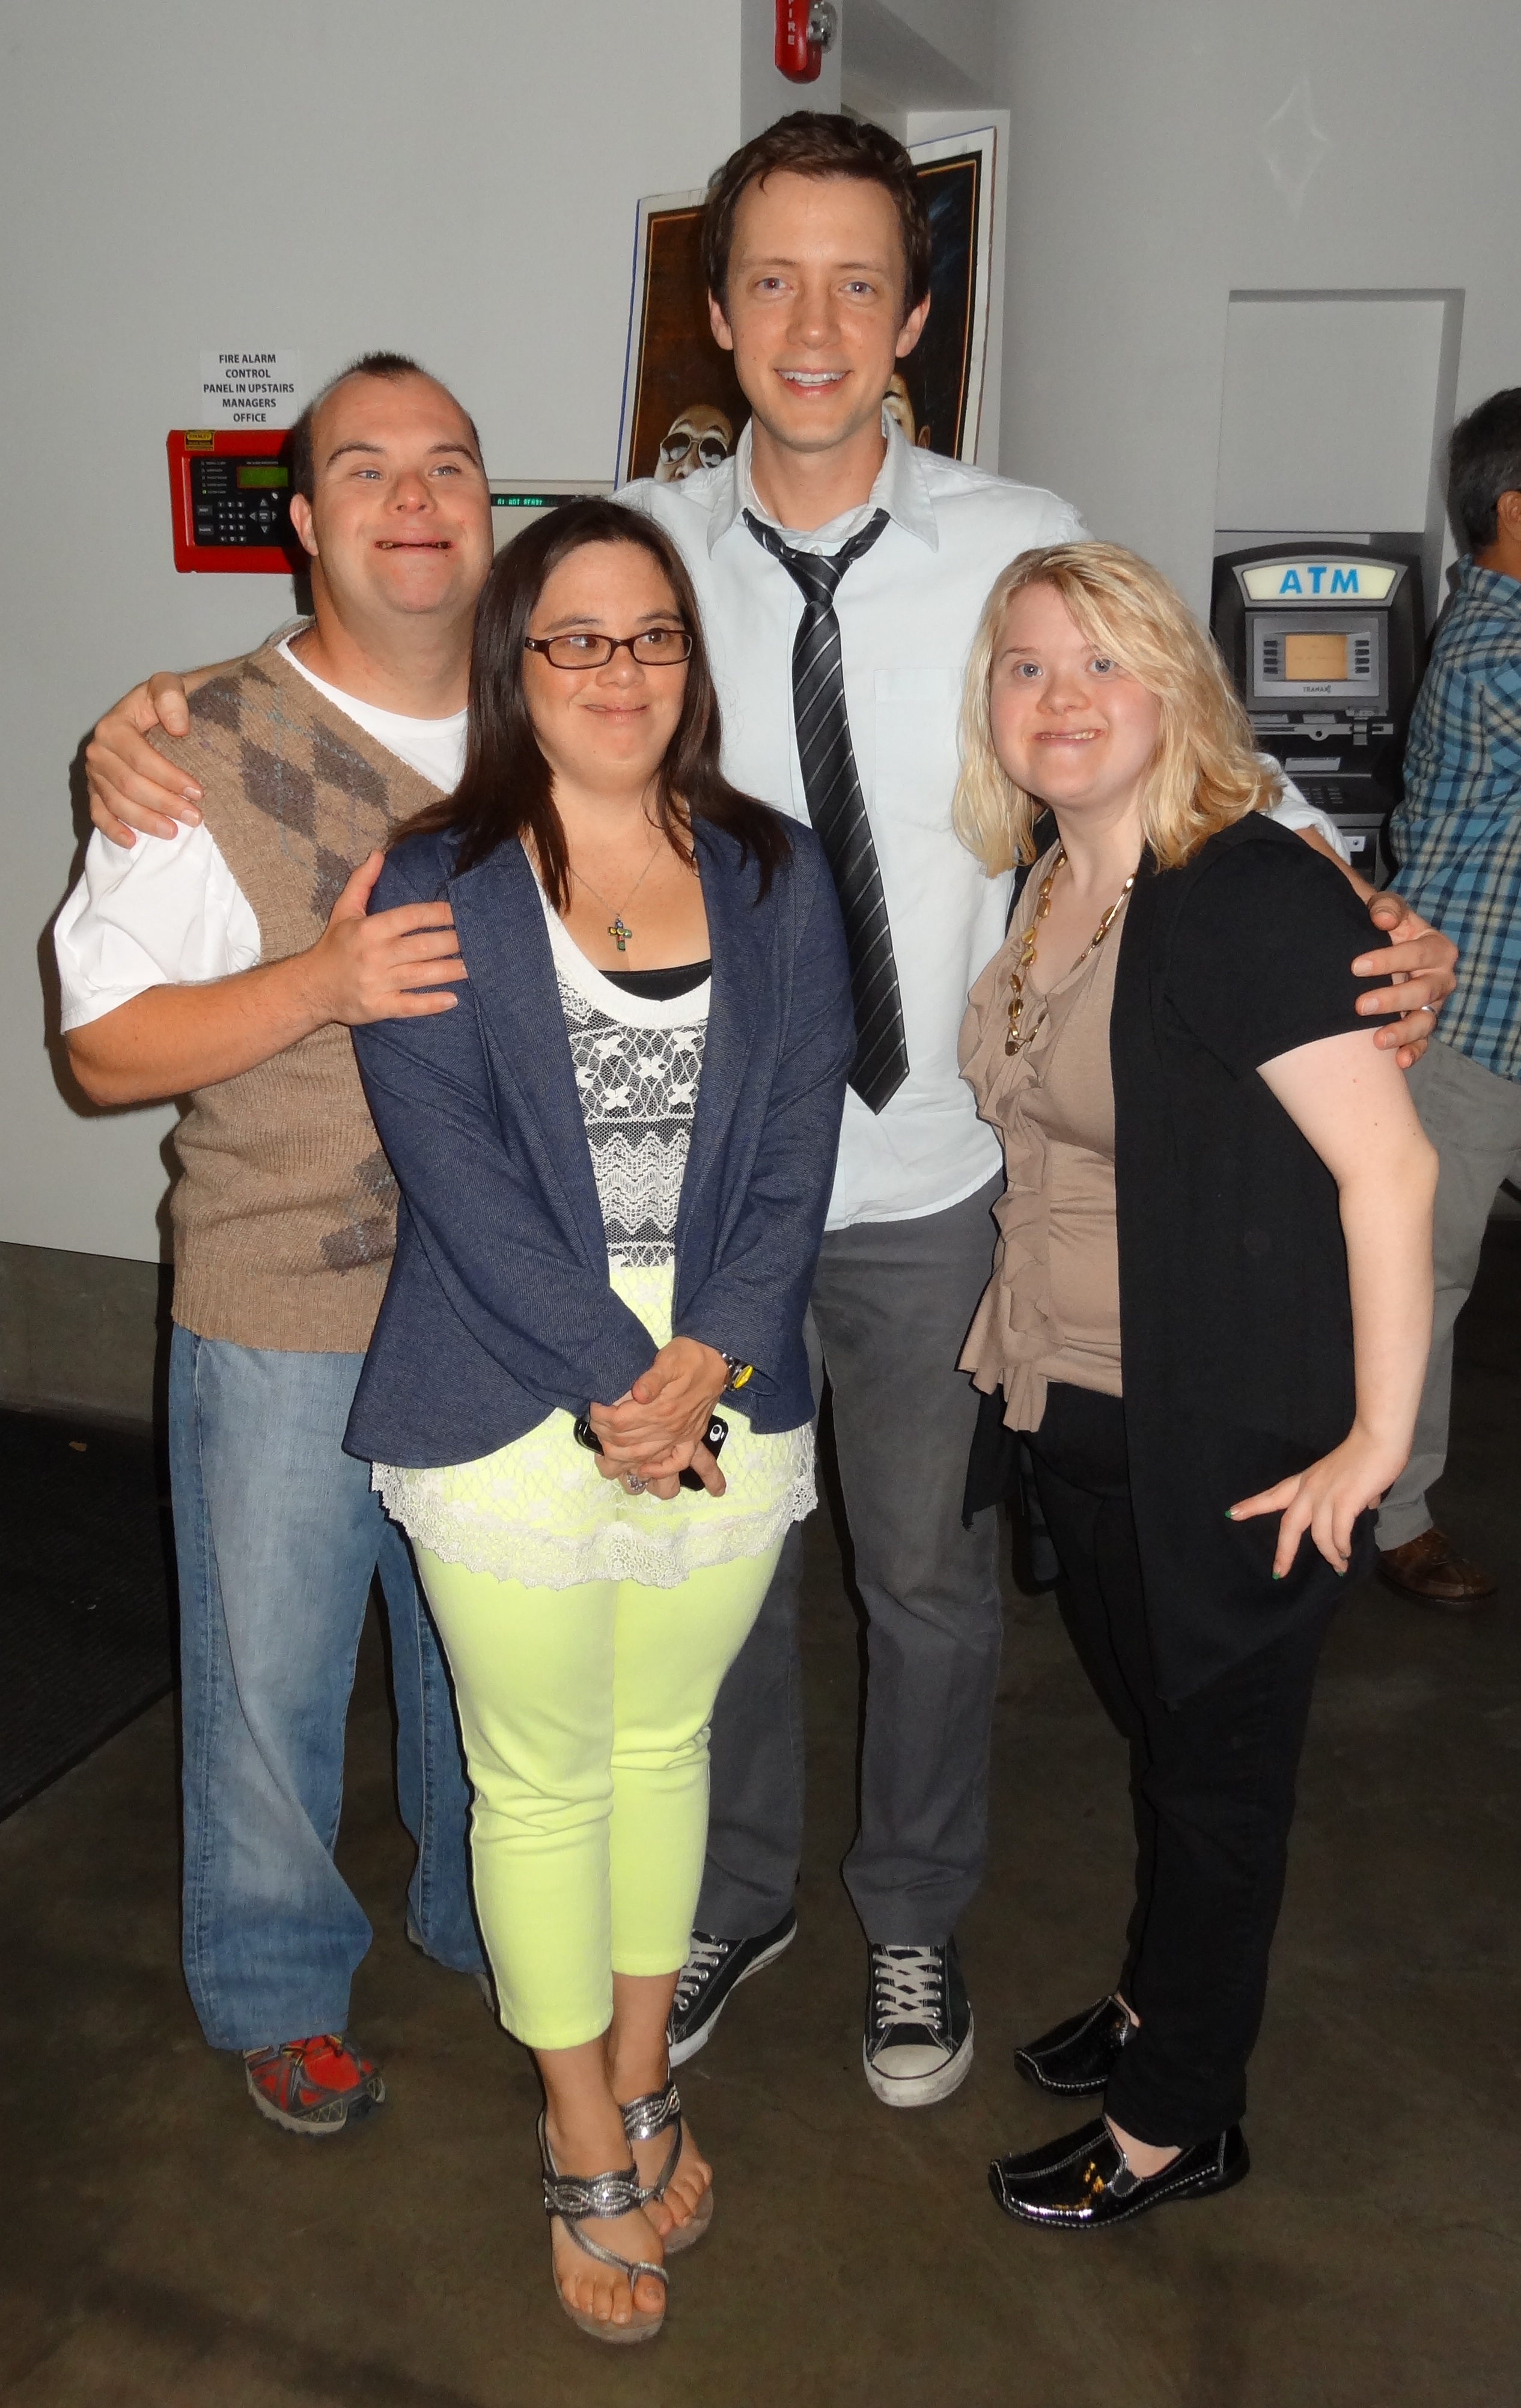 Blair Williamson, Marcia Landeros, Eric Artell and Jessica Morgan at Unidentified premiere.